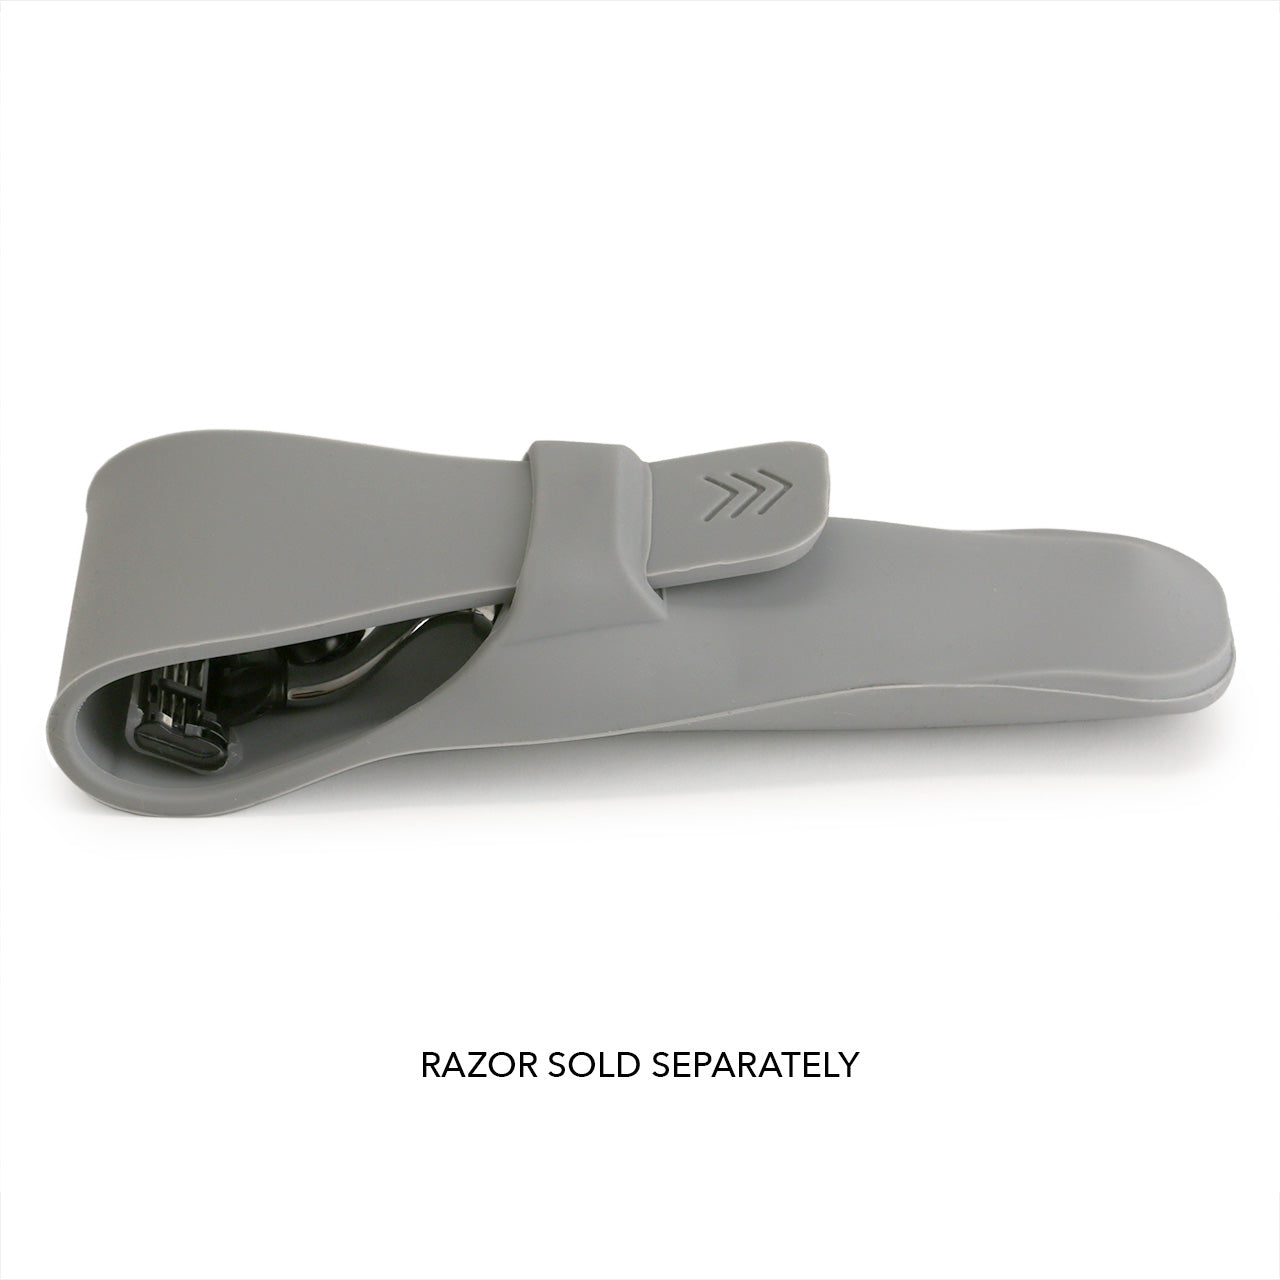 RazorWrap silicone razor case in light grey